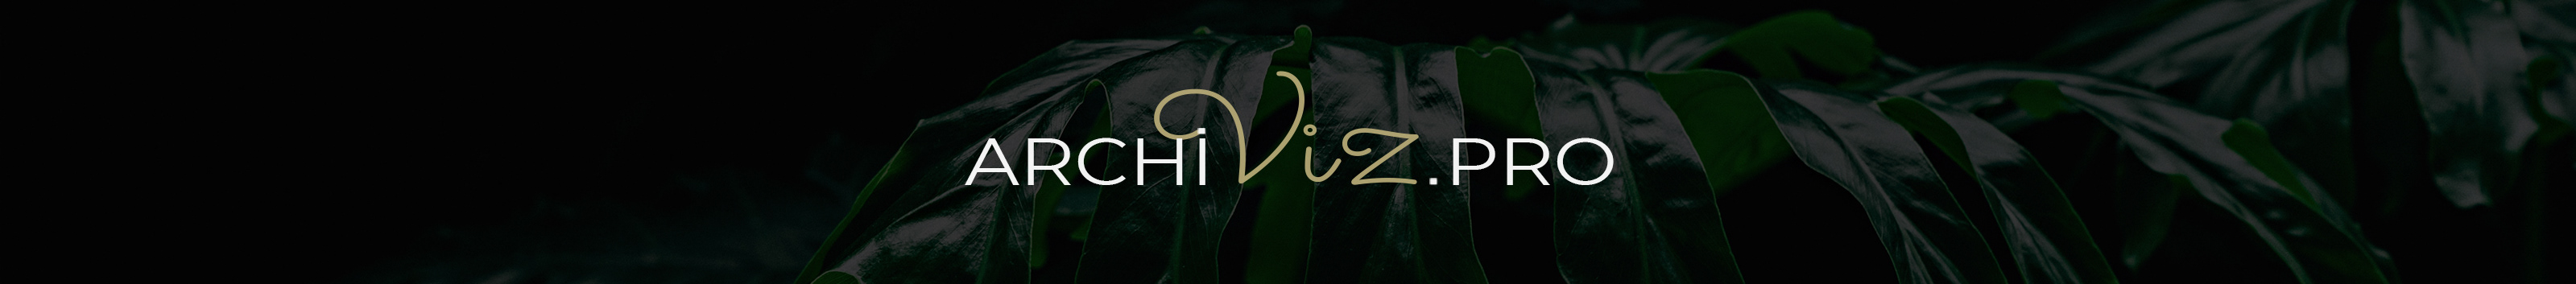 Archi Viz's profile banner